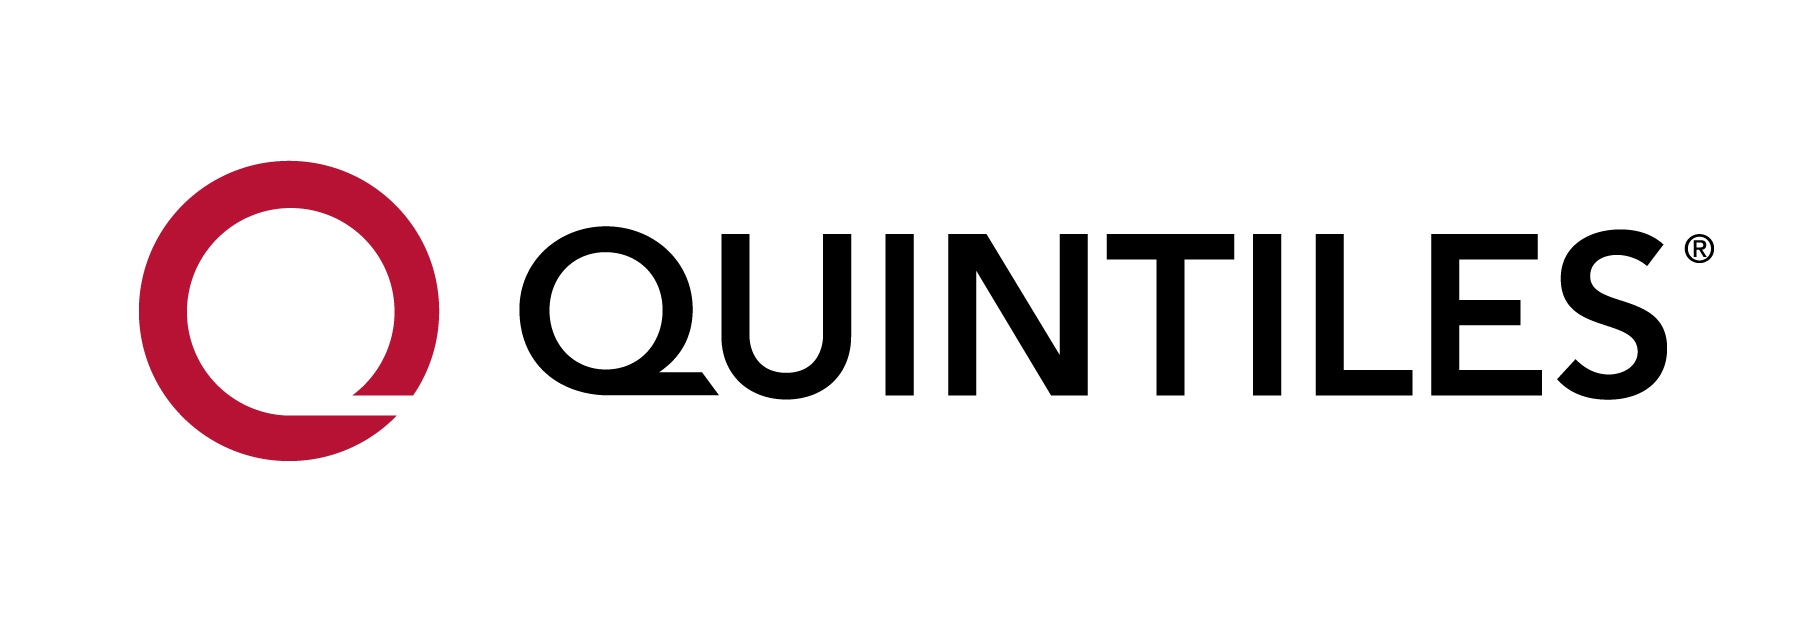 Quintiles Logo photo - 1